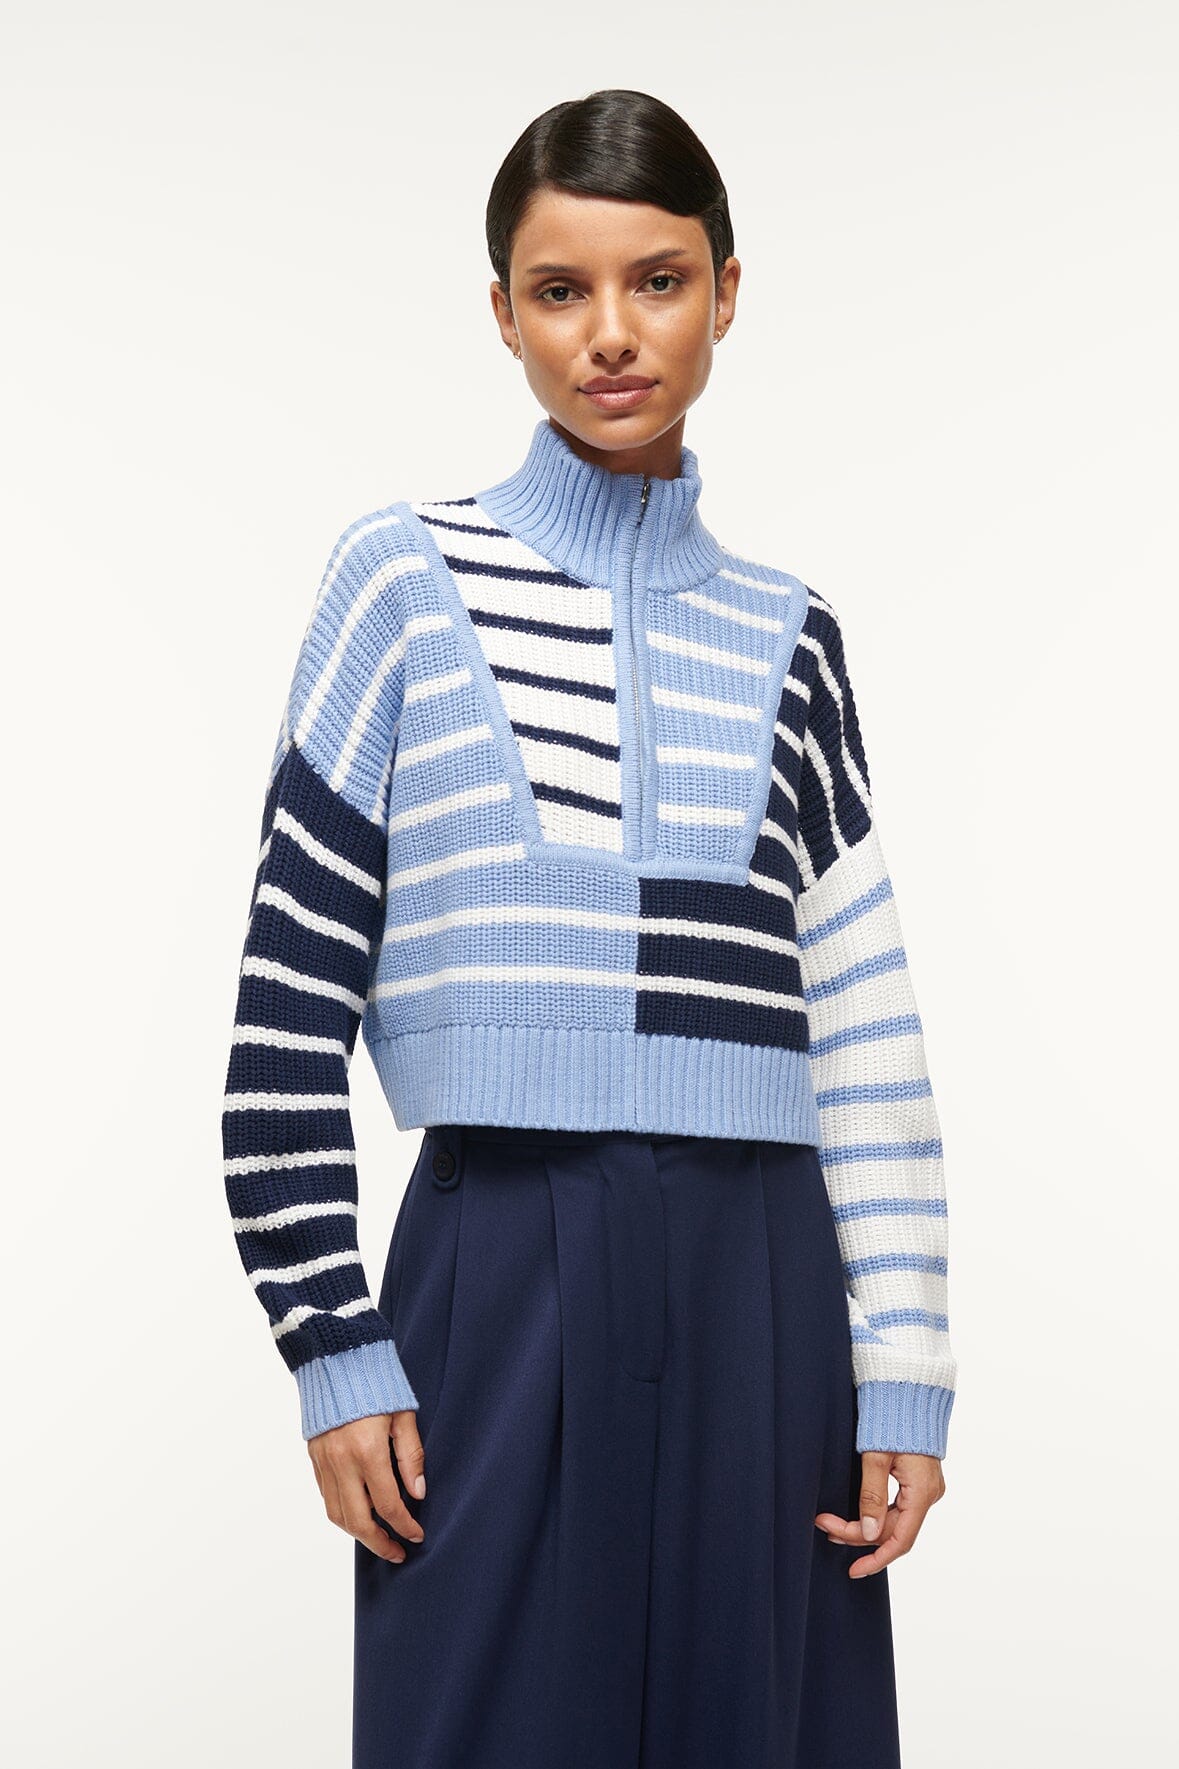 Cropped Hampton Sweater - Adriatic Stripe